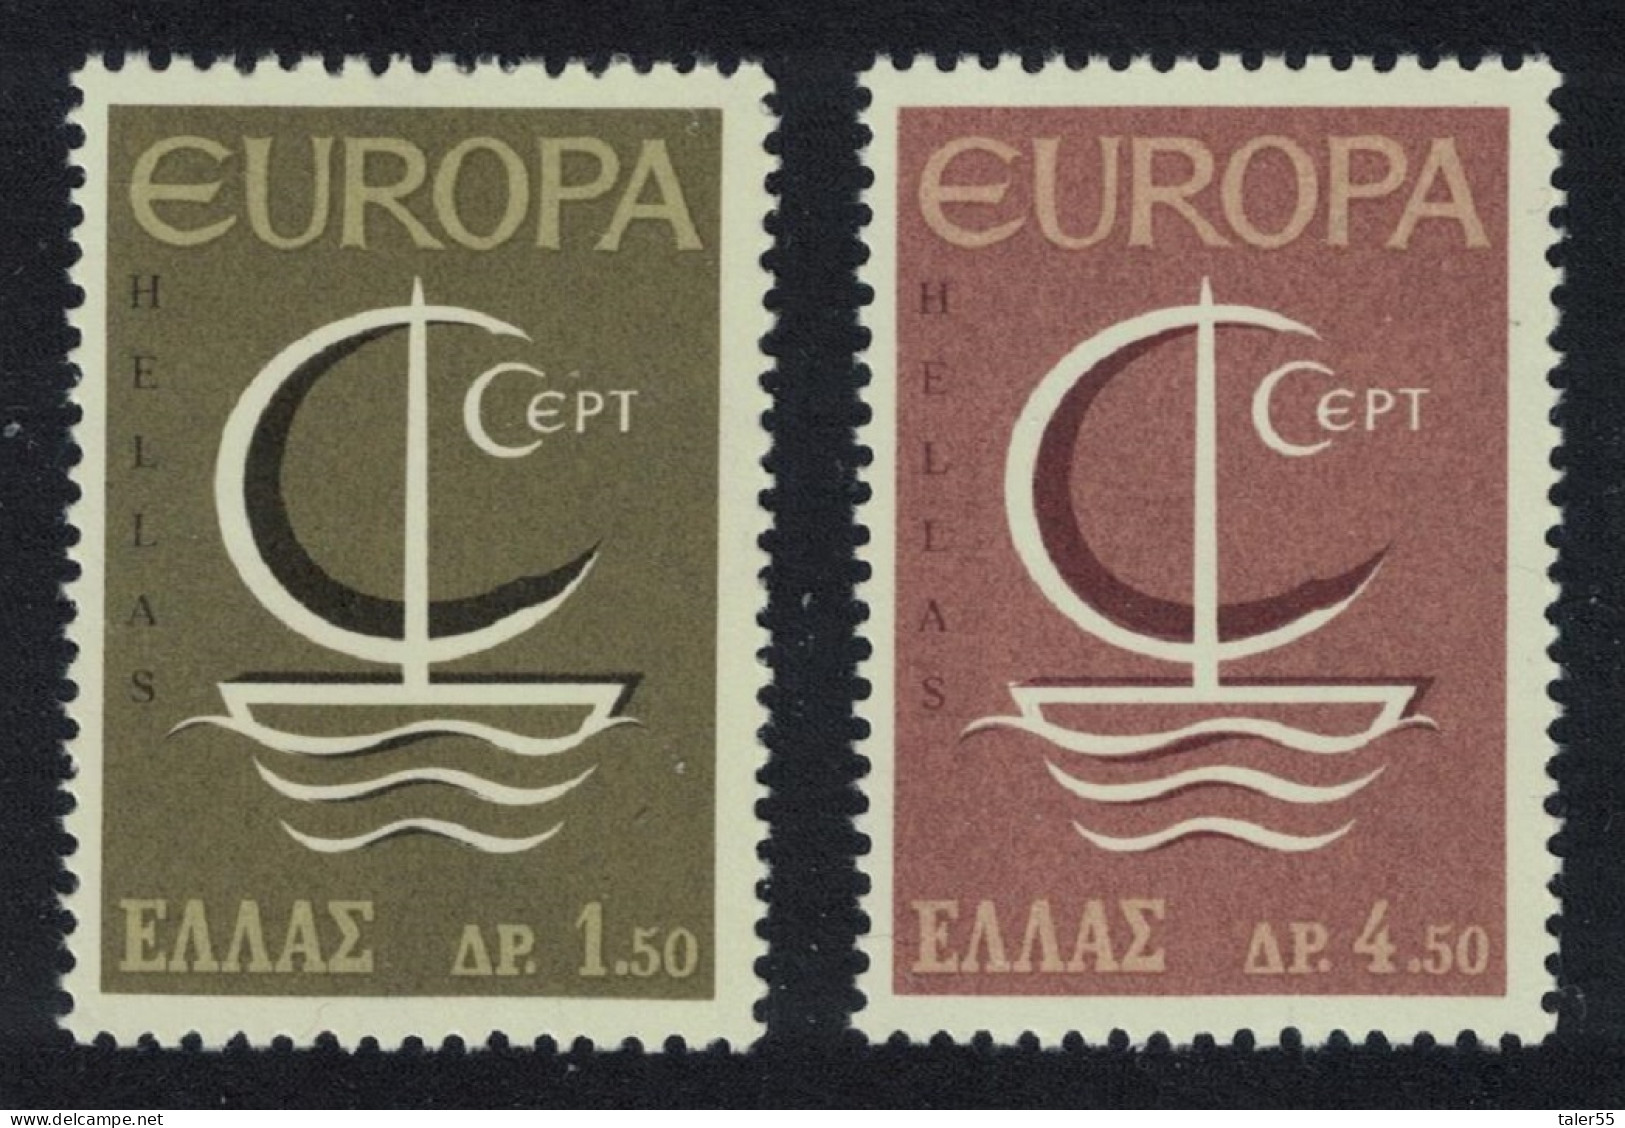 Greece Symbolic Ship Europa 2v 1966 MNH SG#1021-1022 MI#919-920 Sc#862-863 - Nuevos